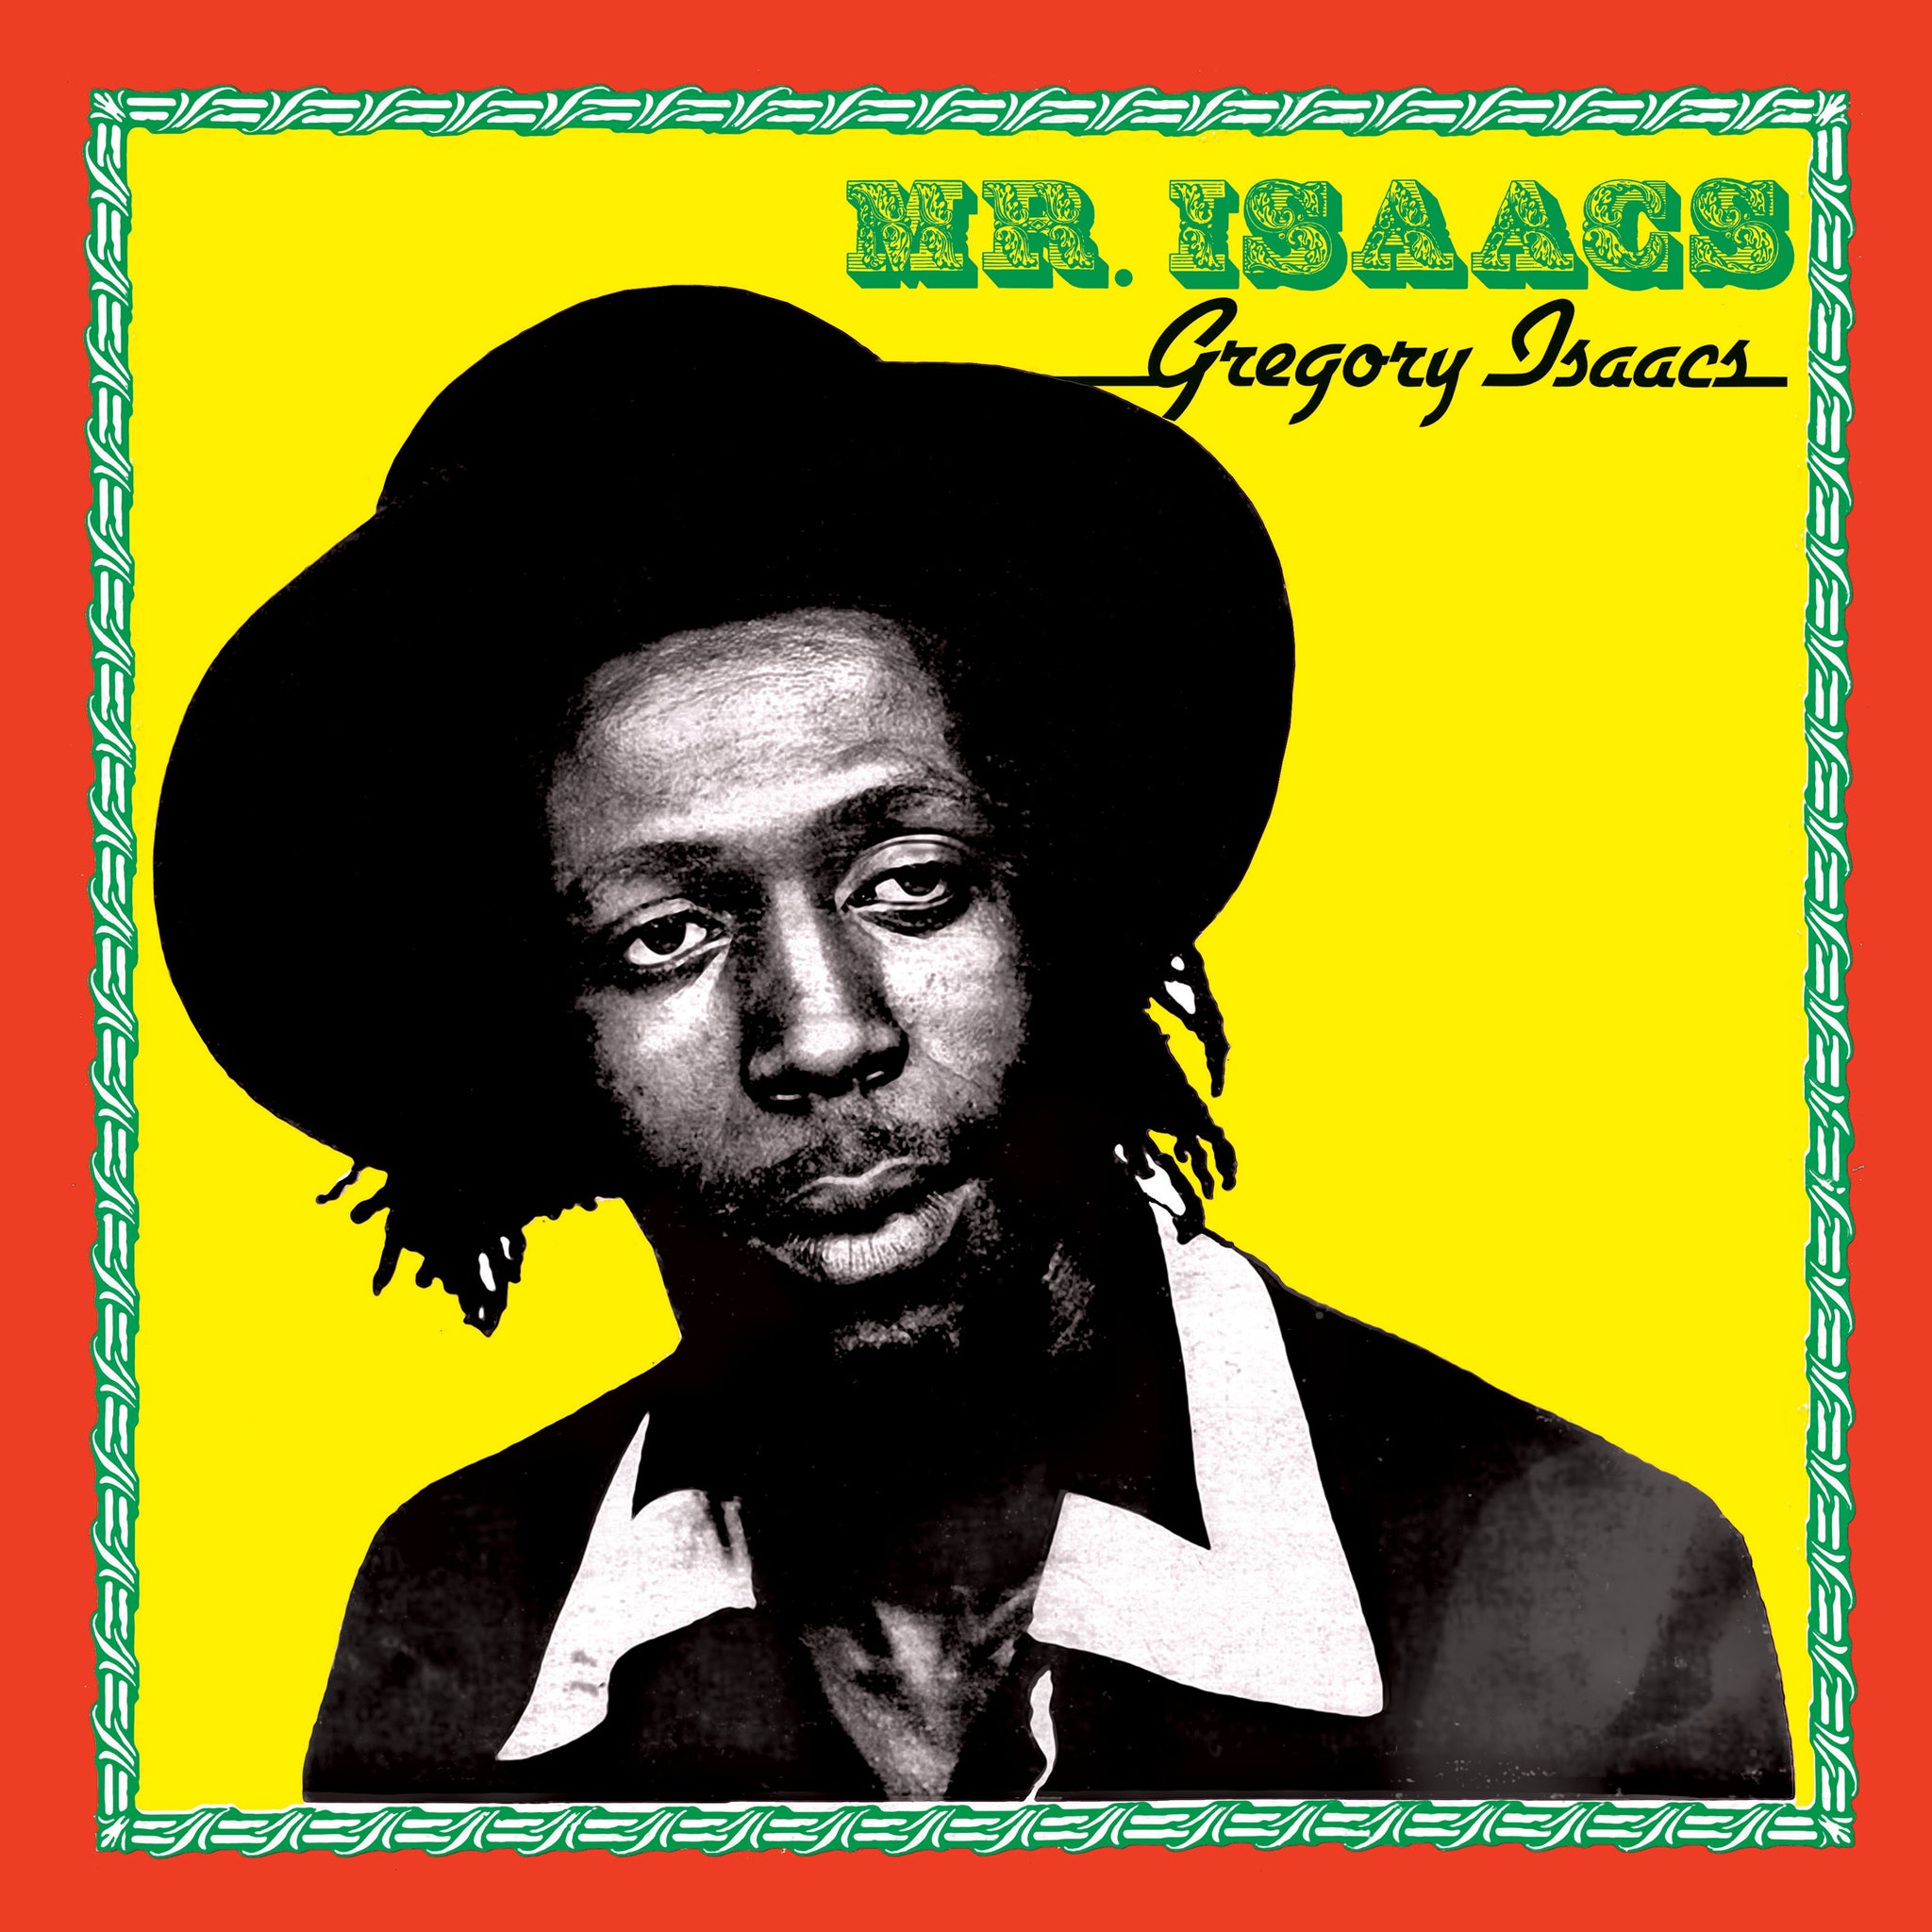 Gregory Isaacs ‎– Mr. Isaacs (1983) - New Vinyl LP Record 2019 Reissue - Roots Reggae